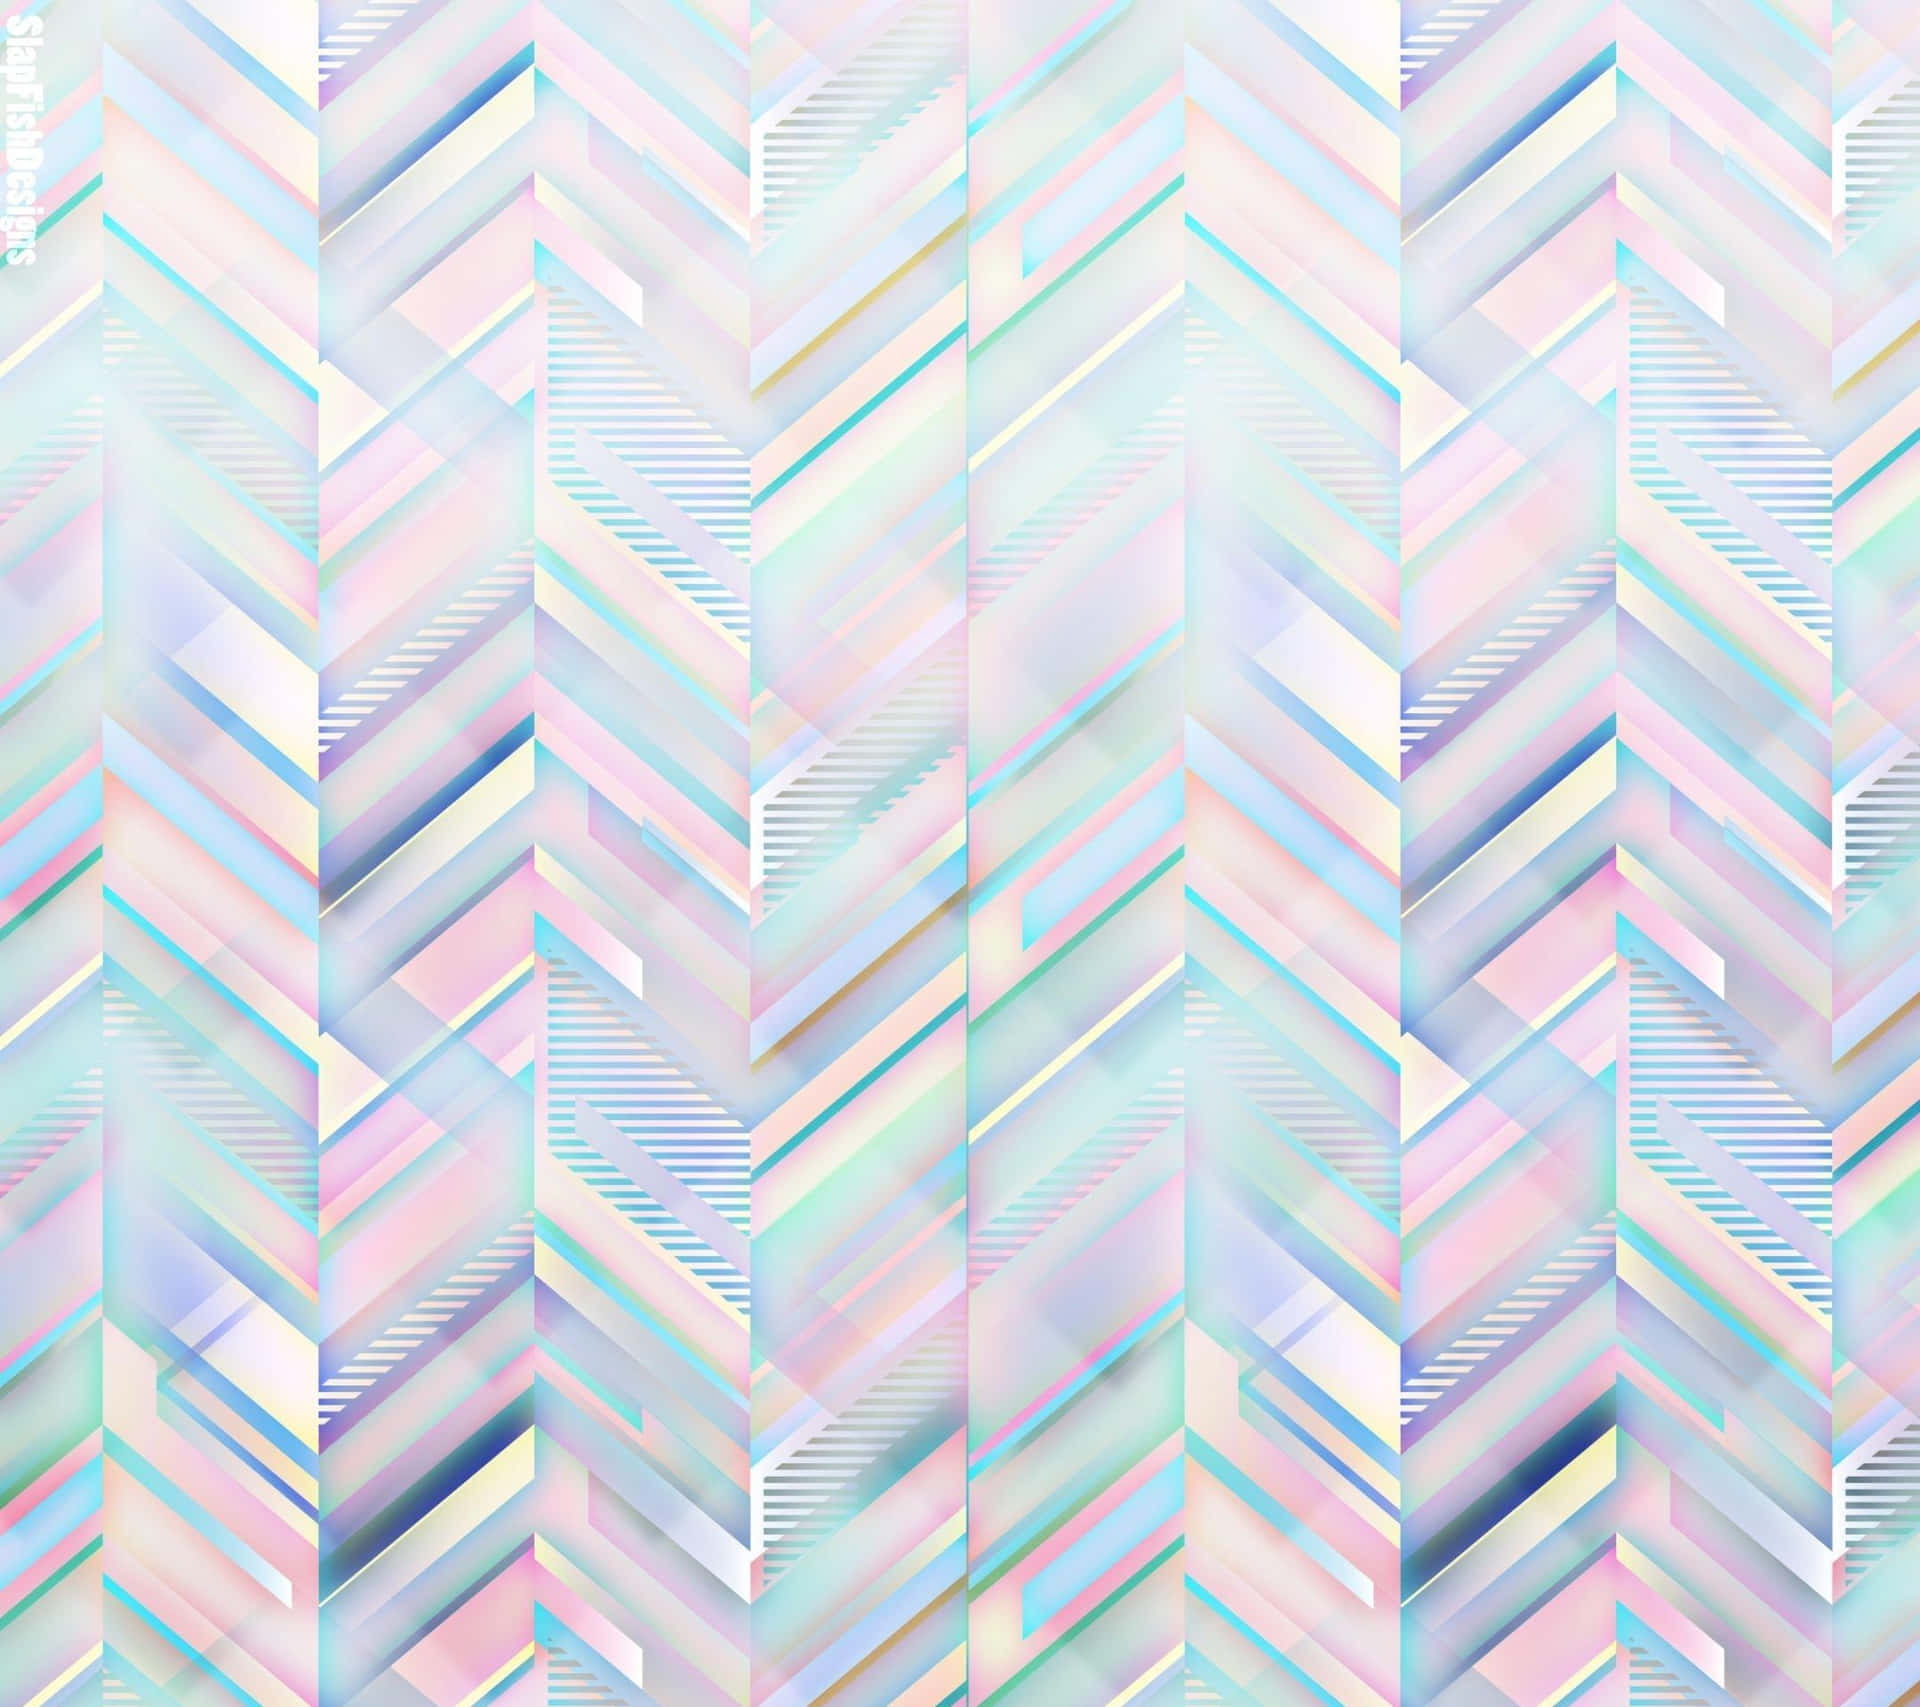 Delightful Blue&White Patterns of Tumblr Wallpaper